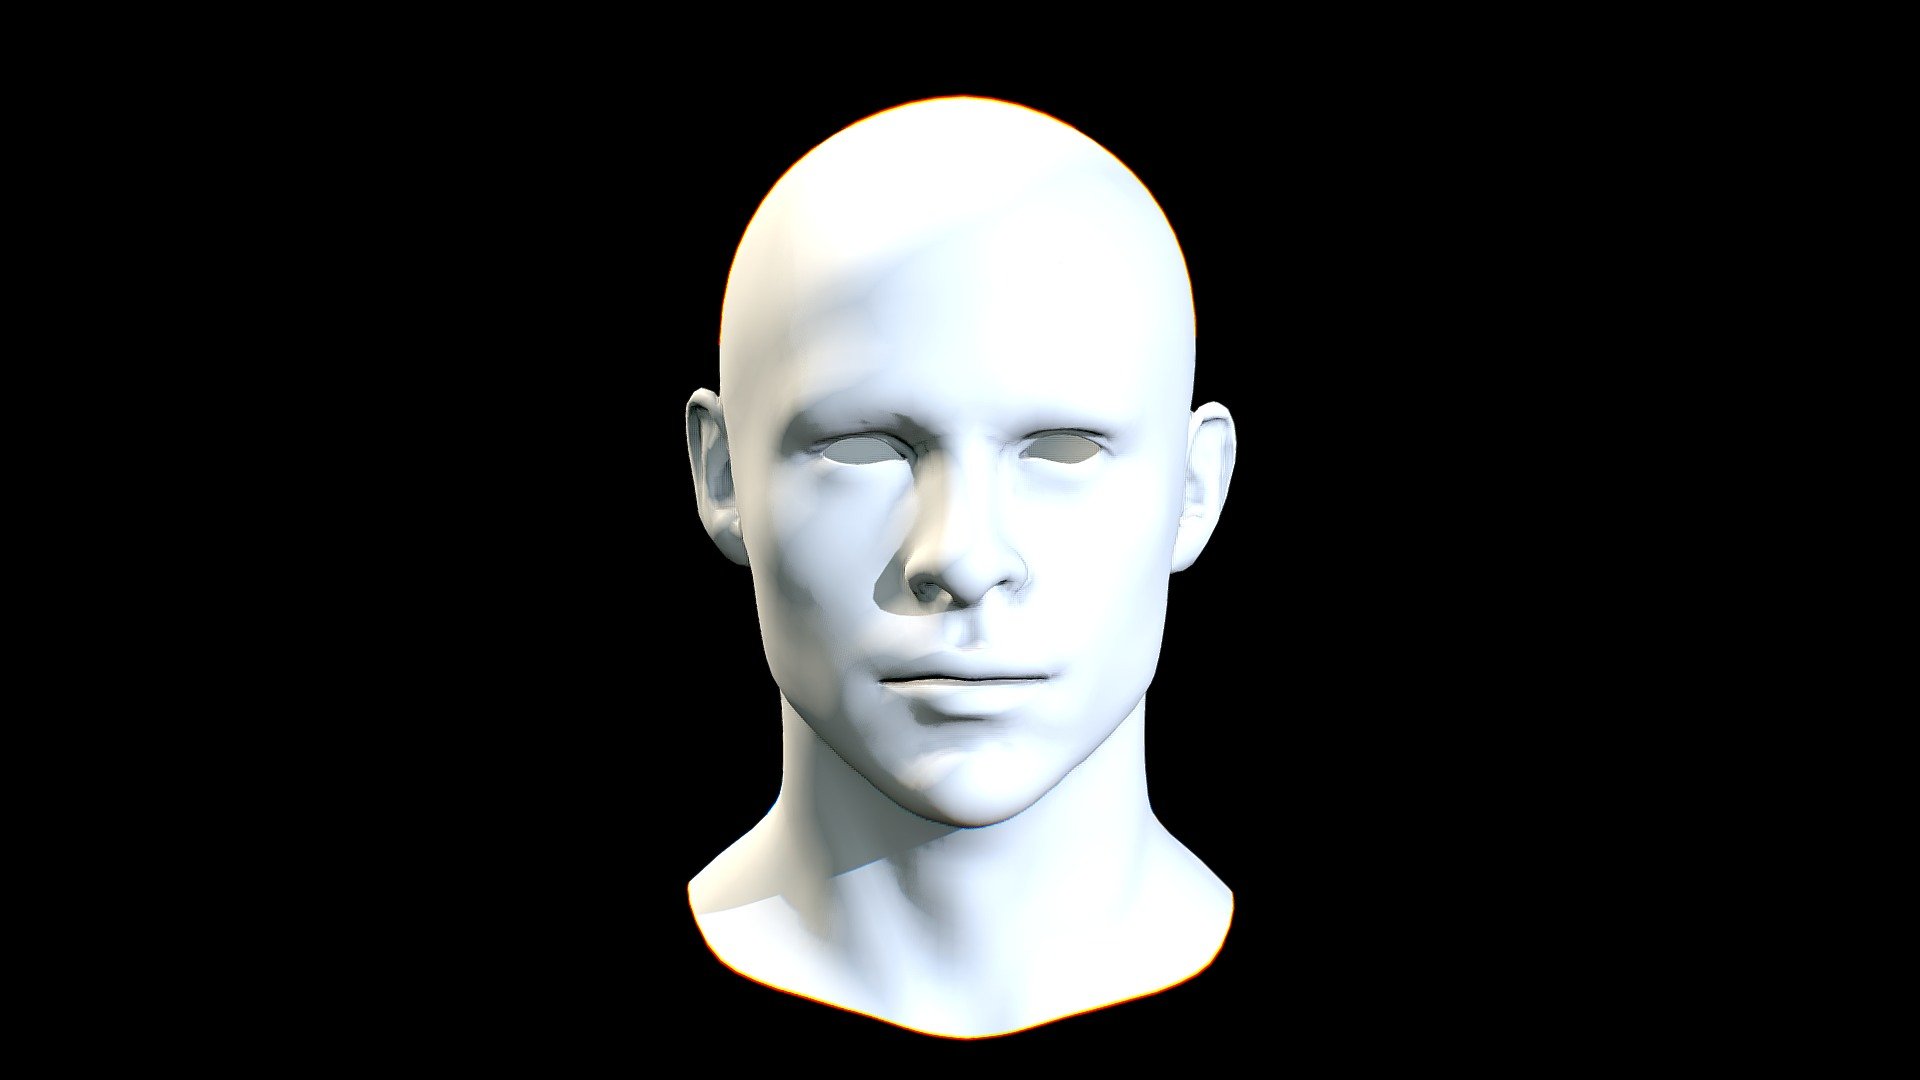 James Kirk basemesh free
uv map - KIRK_STAR TREK_HEAD_MALE_CHRIS PINE - Download Free 3D model by mono (@michela.000) 3d model